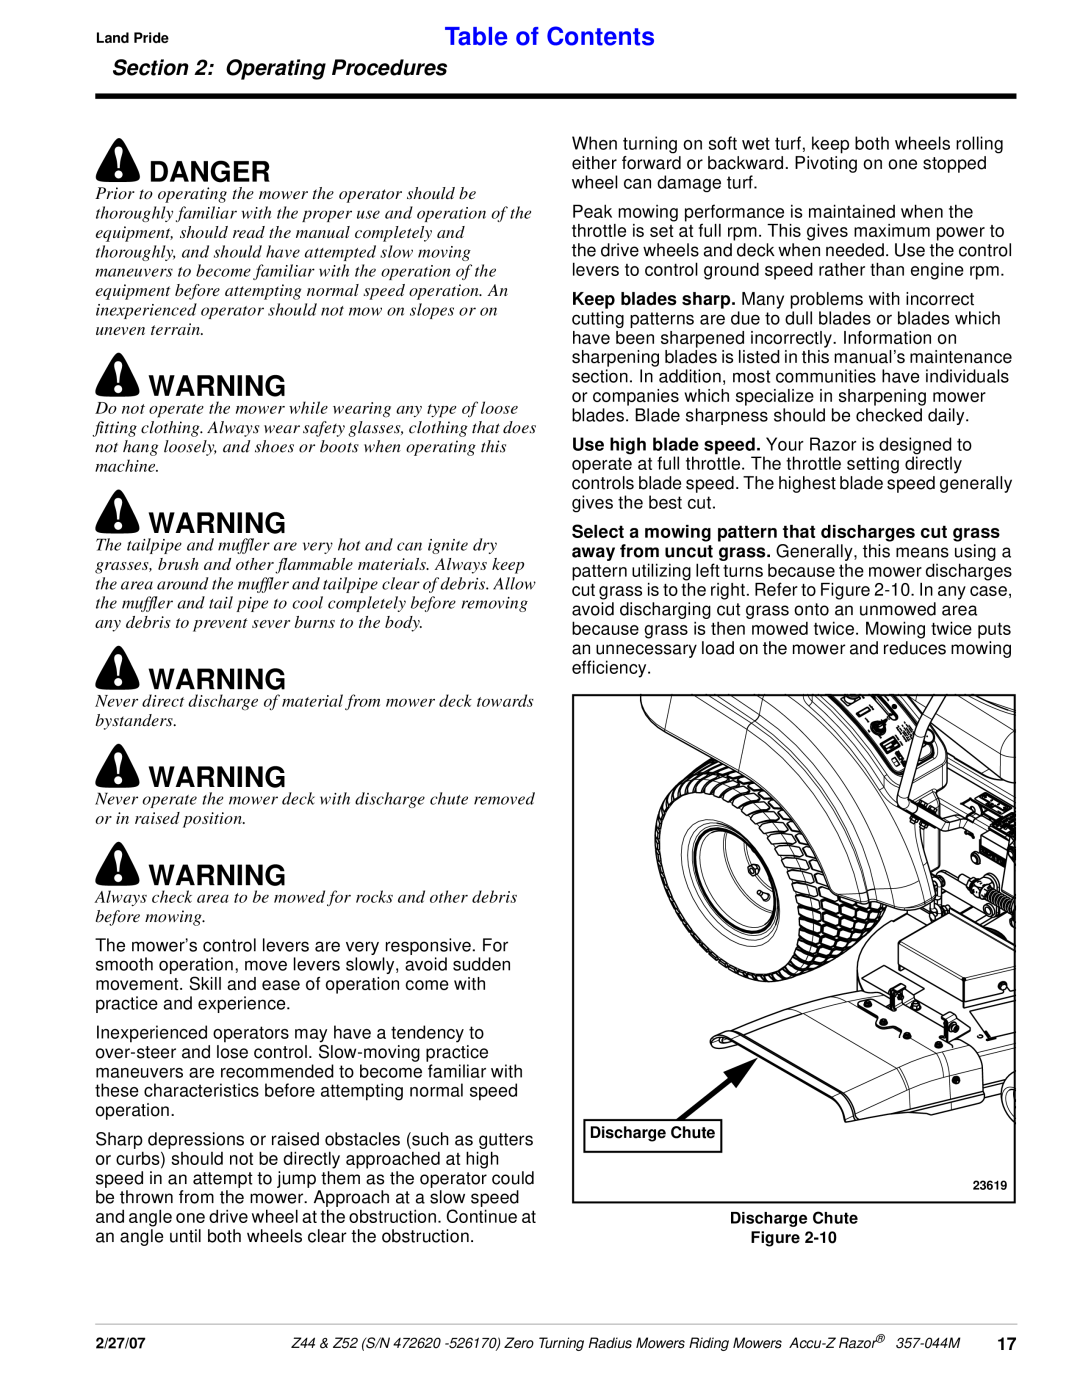 Land Pride 357-044M manual Danger, Land PrideTable of Contents, Operating Procedures 